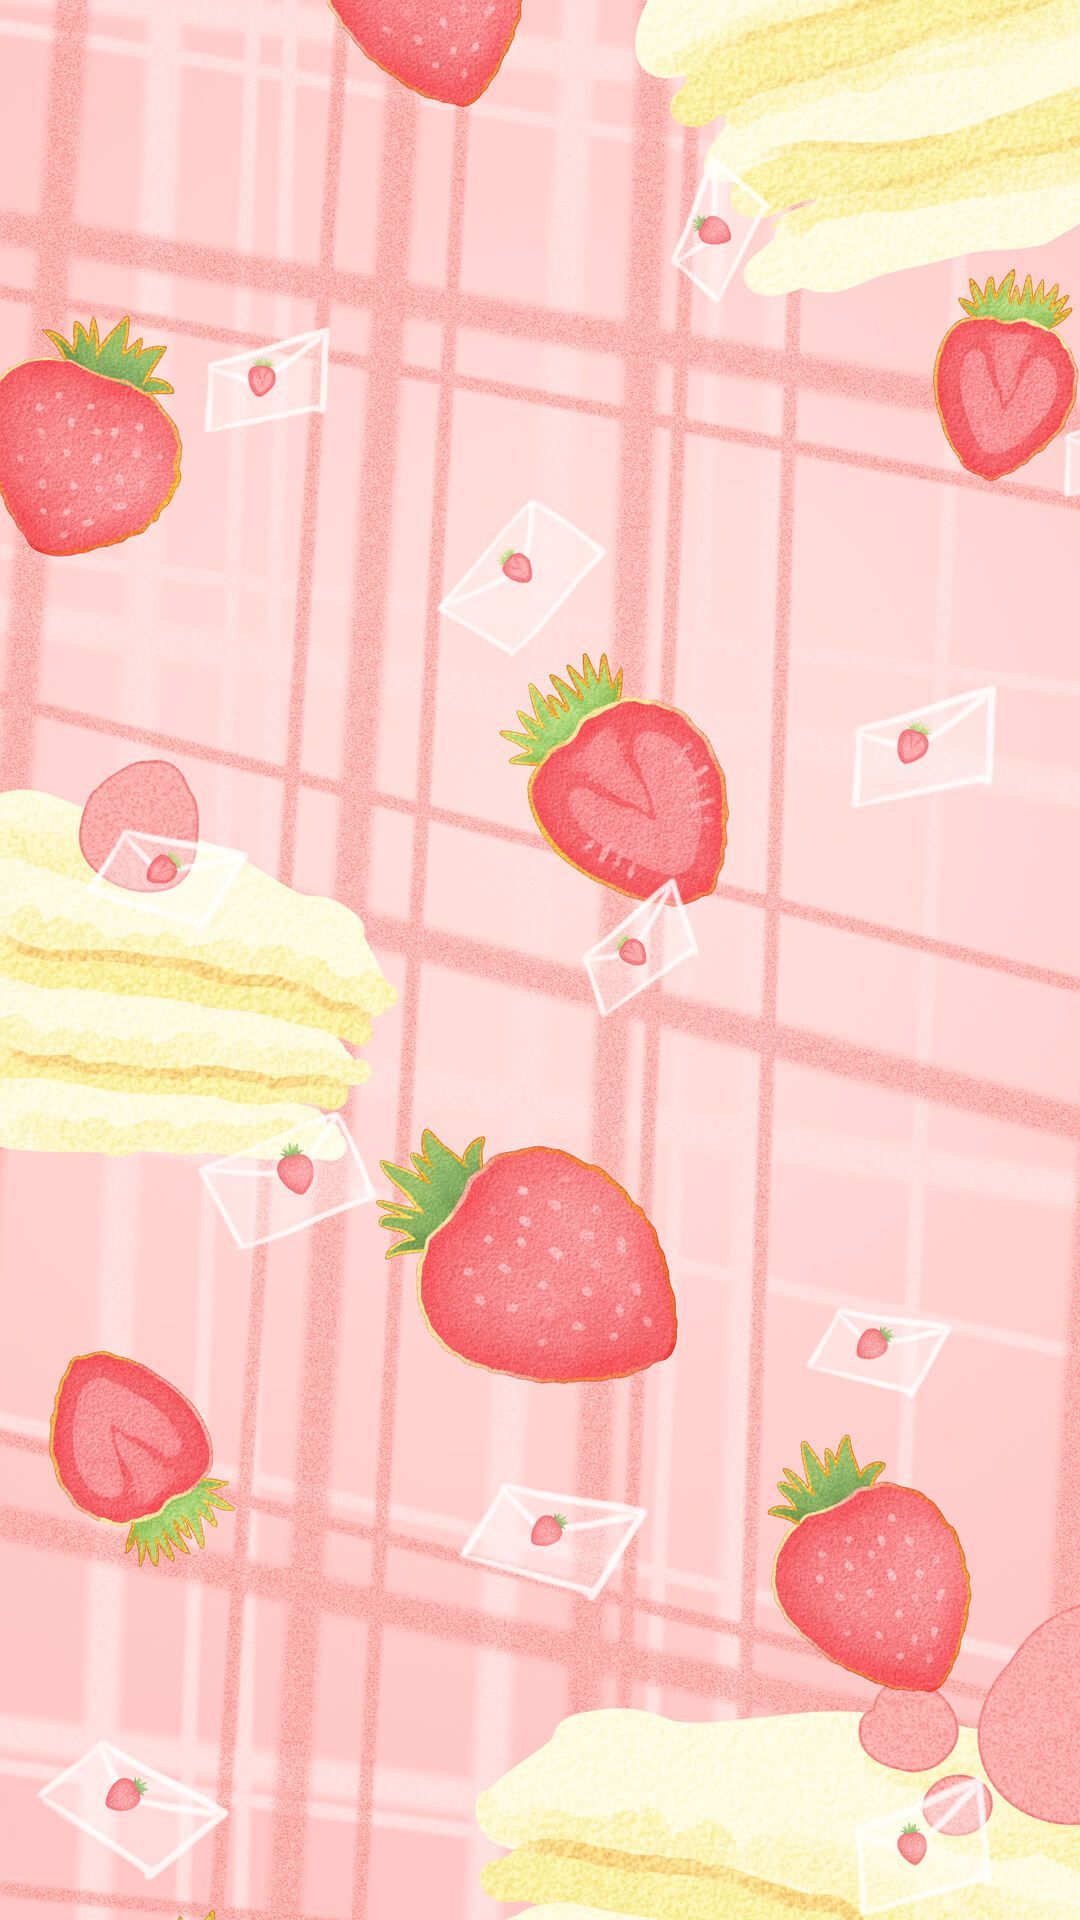 strawberry wallpaper. Wallpaper iphone cute, Cute pastel wallpaper, Soft wallpaper